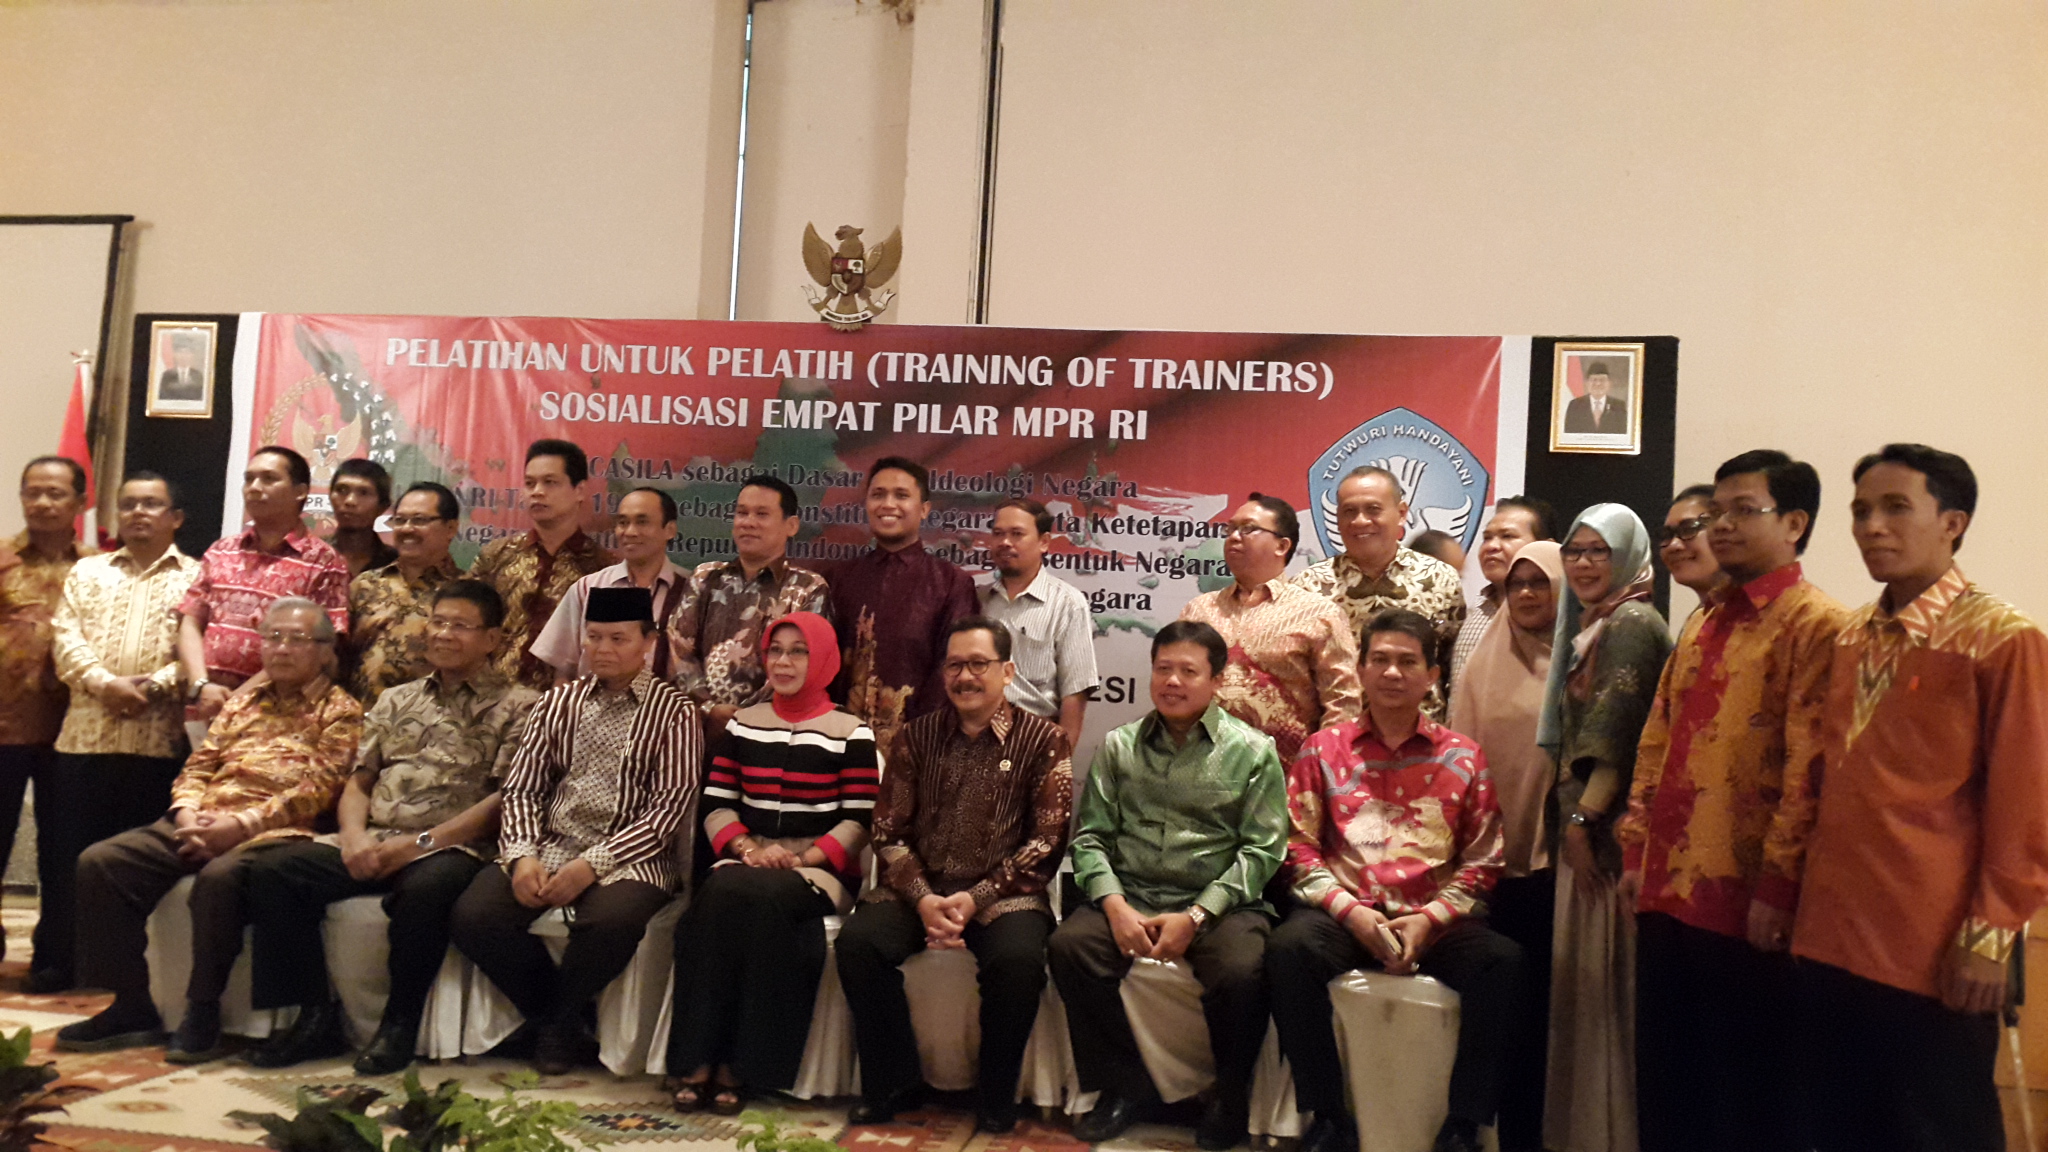 Peserta TOT berpose dengan Wakil Ketua MPR RI Hidayat Nur Wahid dan beberapa Anggota MPR RI Lainnya.